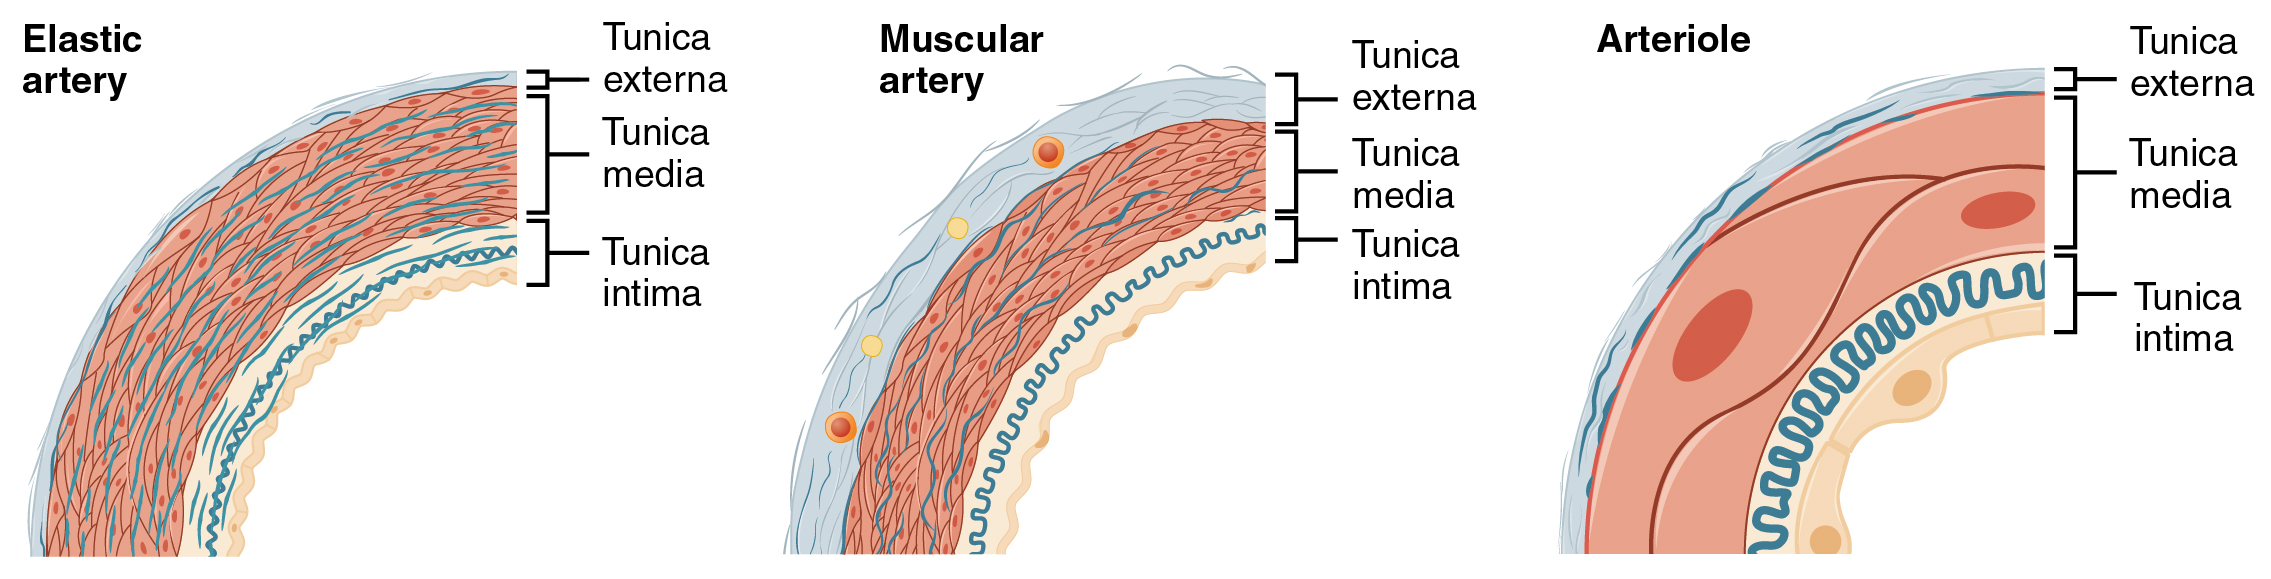 2103_Muscular_and_Elastic_Artery_Arteriole.jpg